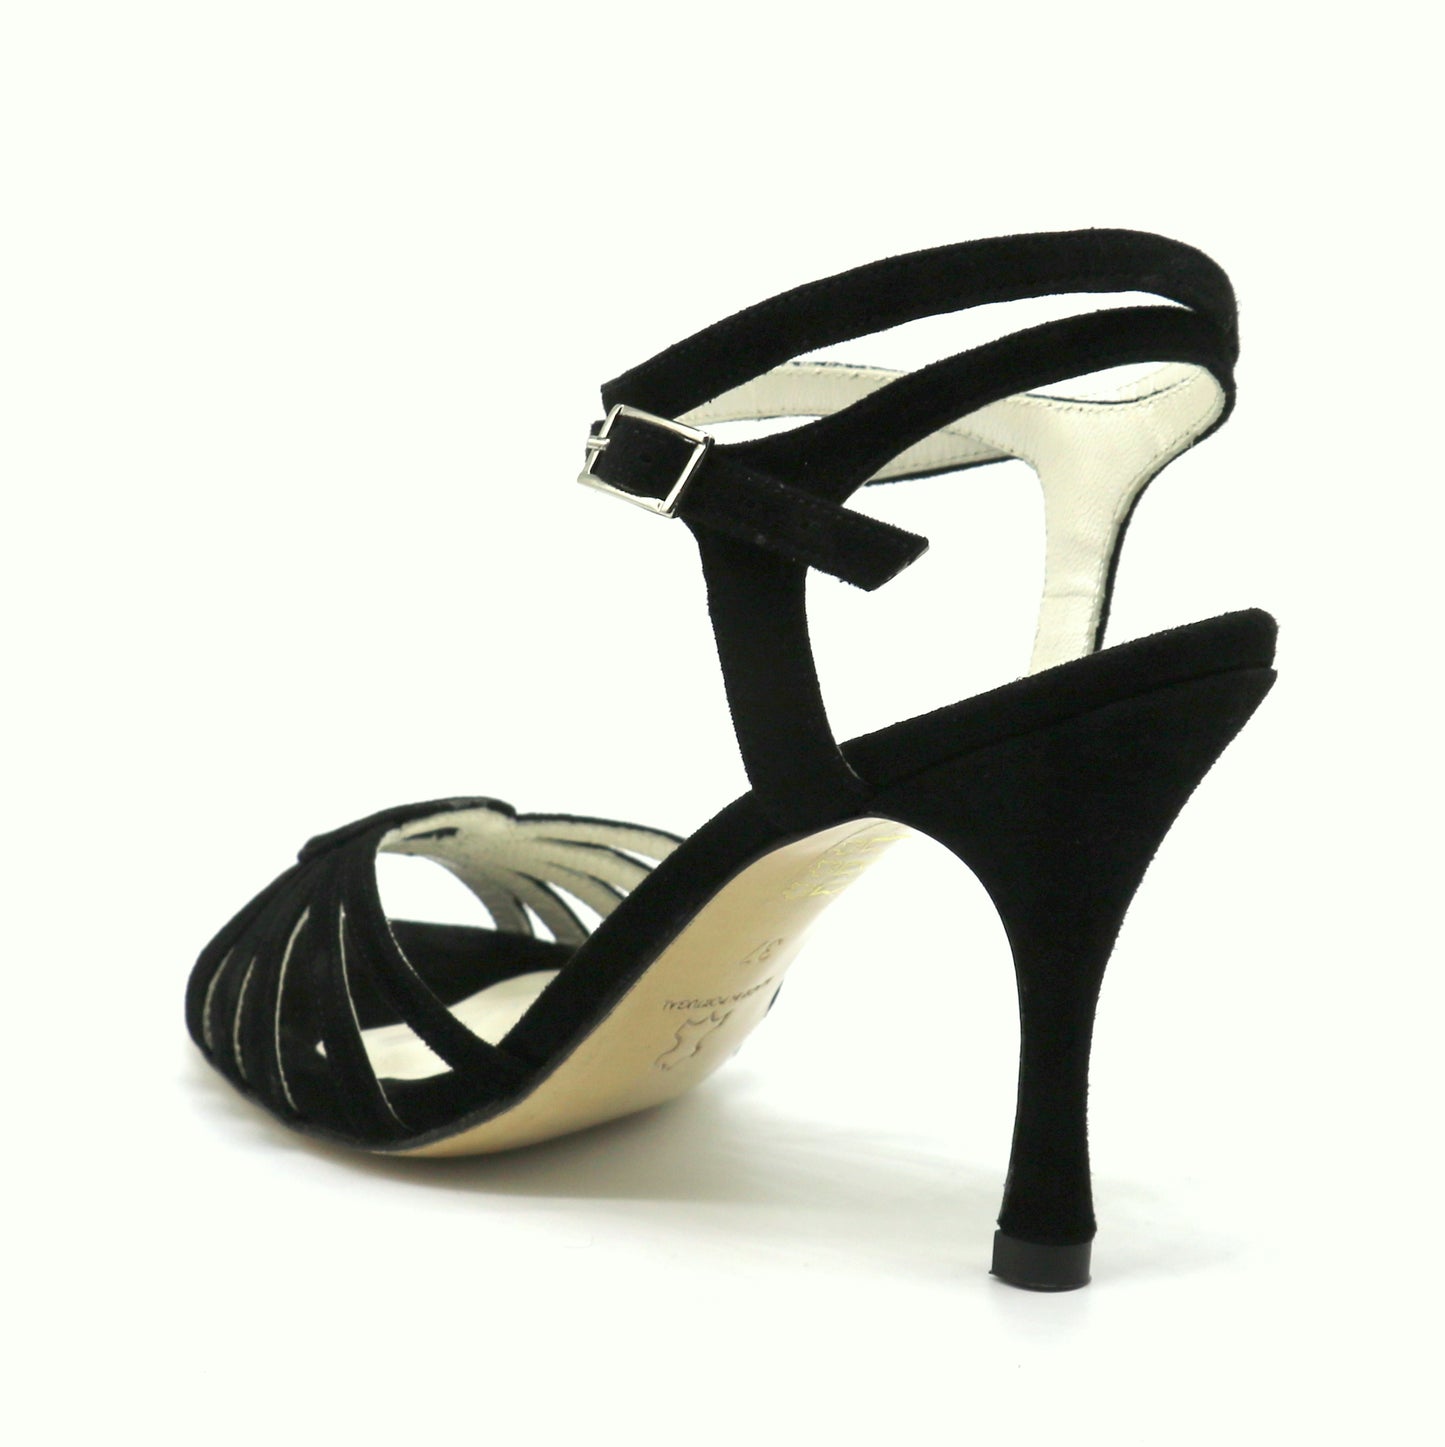 Aire black suede heels 8cm